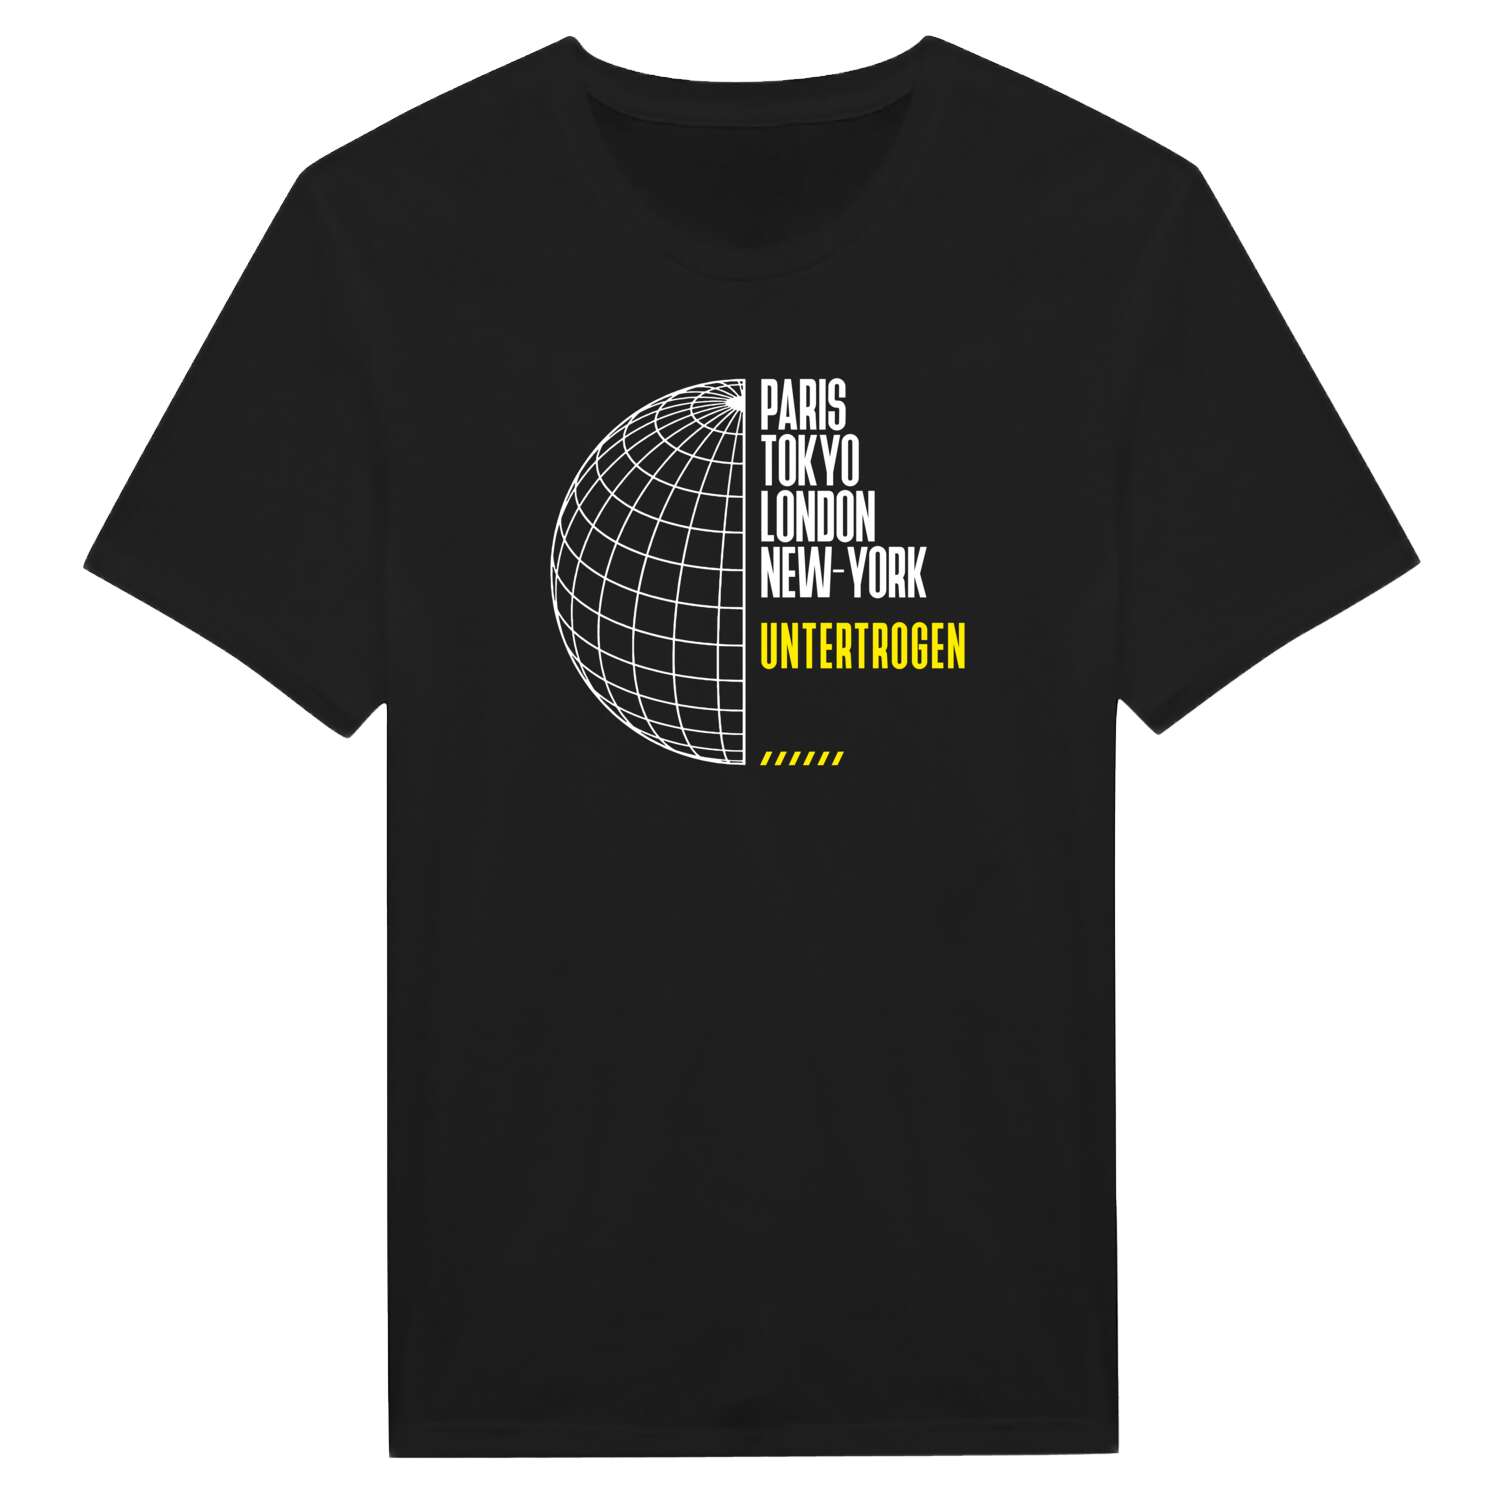 Untertrogen T-Shirt »Paris Tokyo London«